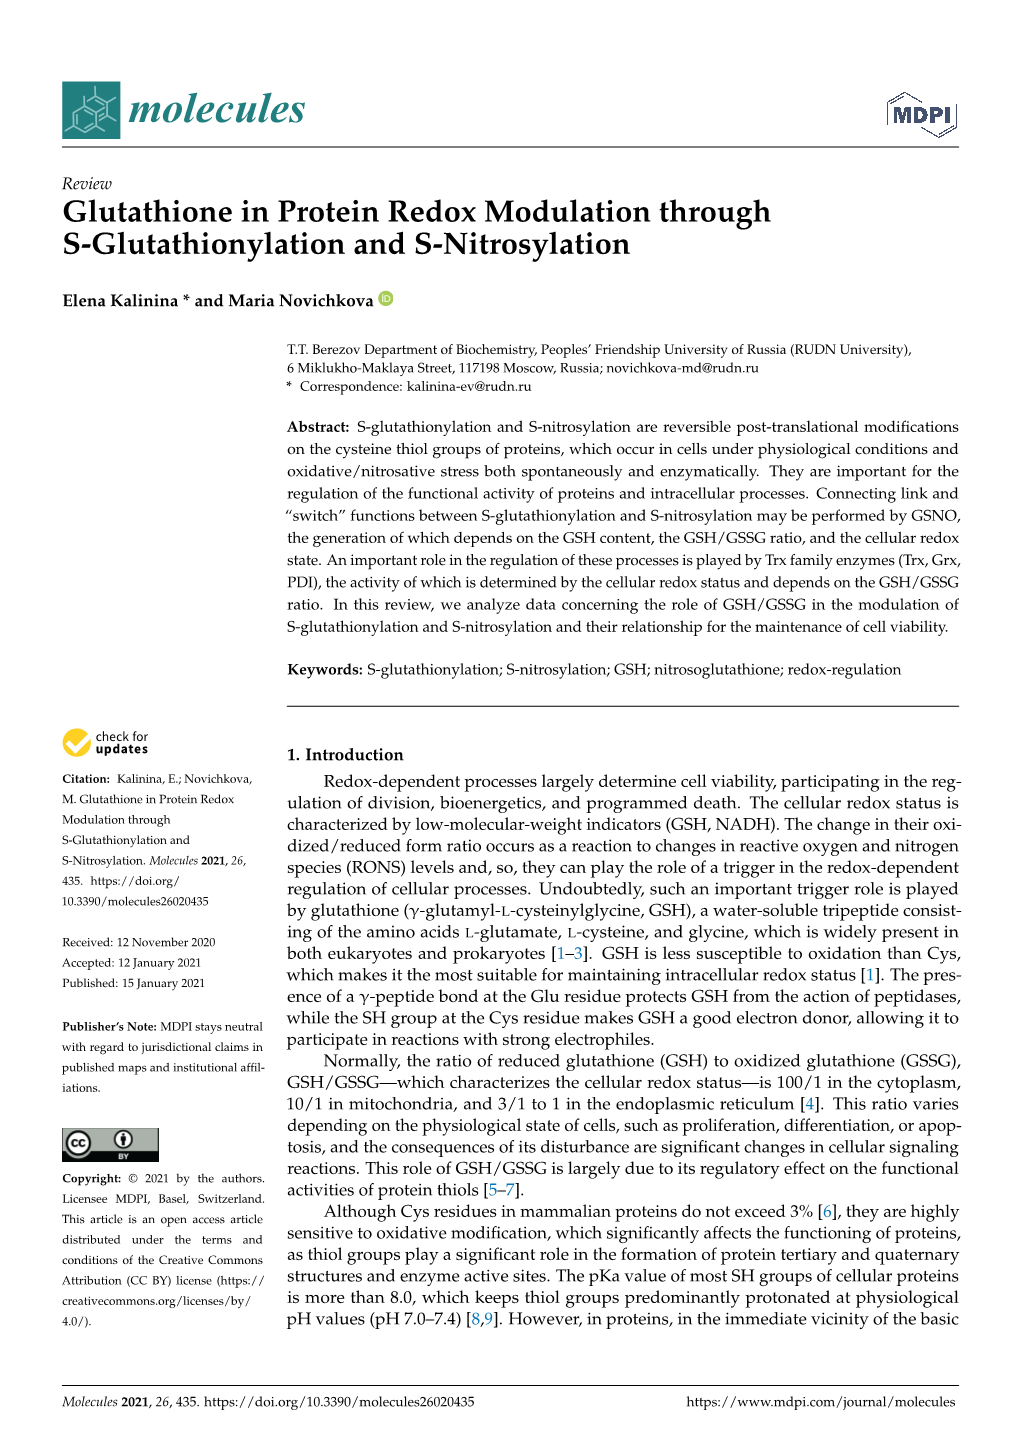 Glutathione in Protein Redox Modulation Through S-Glutathionylation and S-Nitrosylation